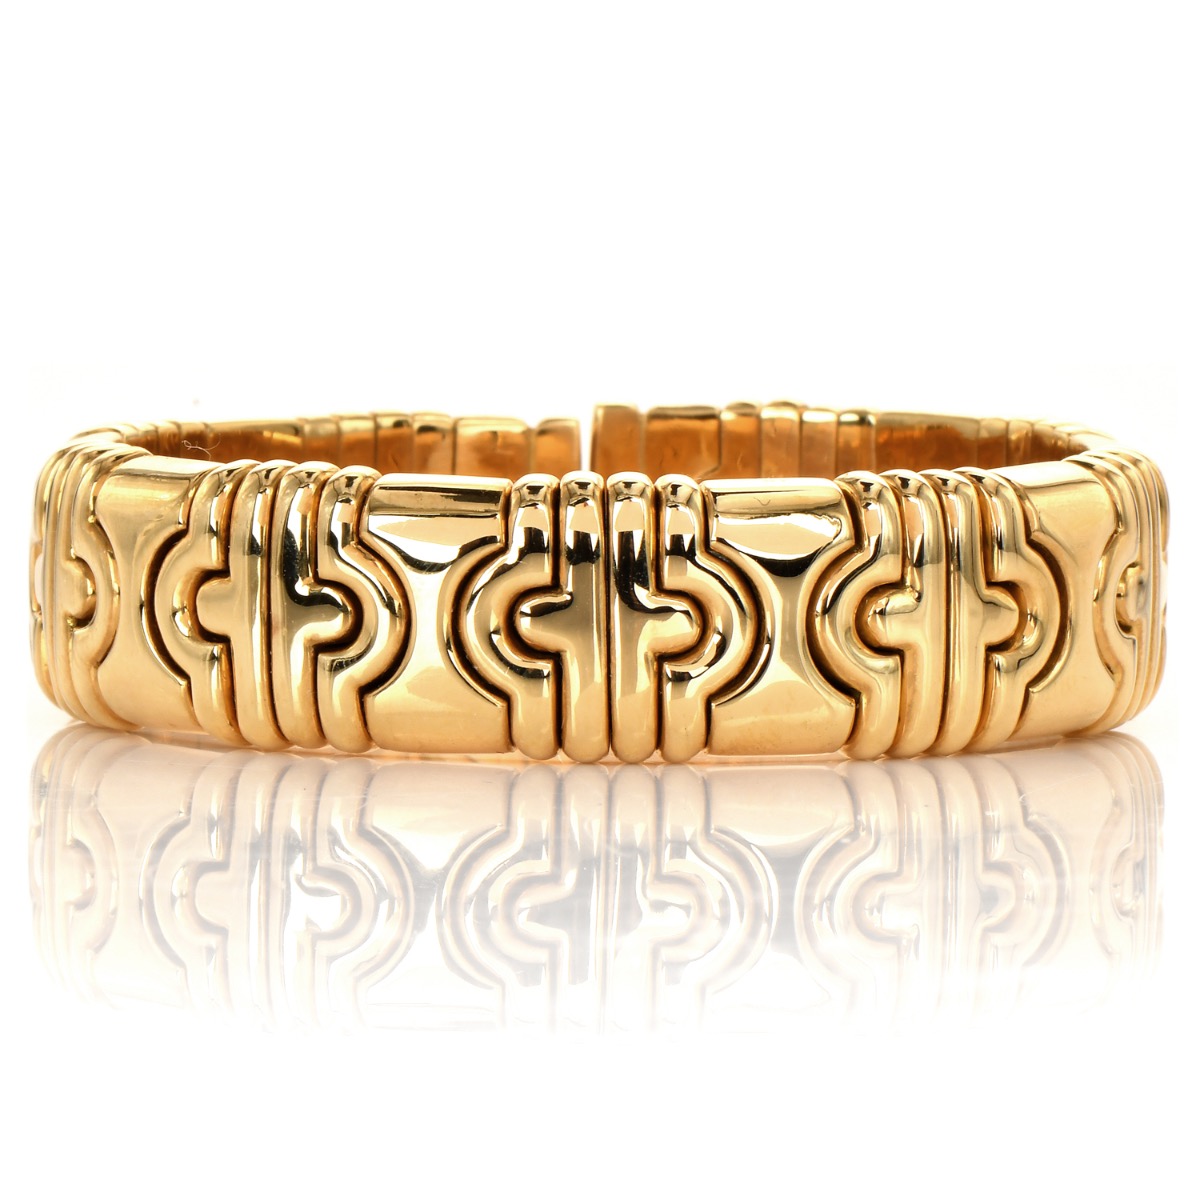 BVLGARI PARENTHESIS 18k Gold Cuff Bangle Bracelet